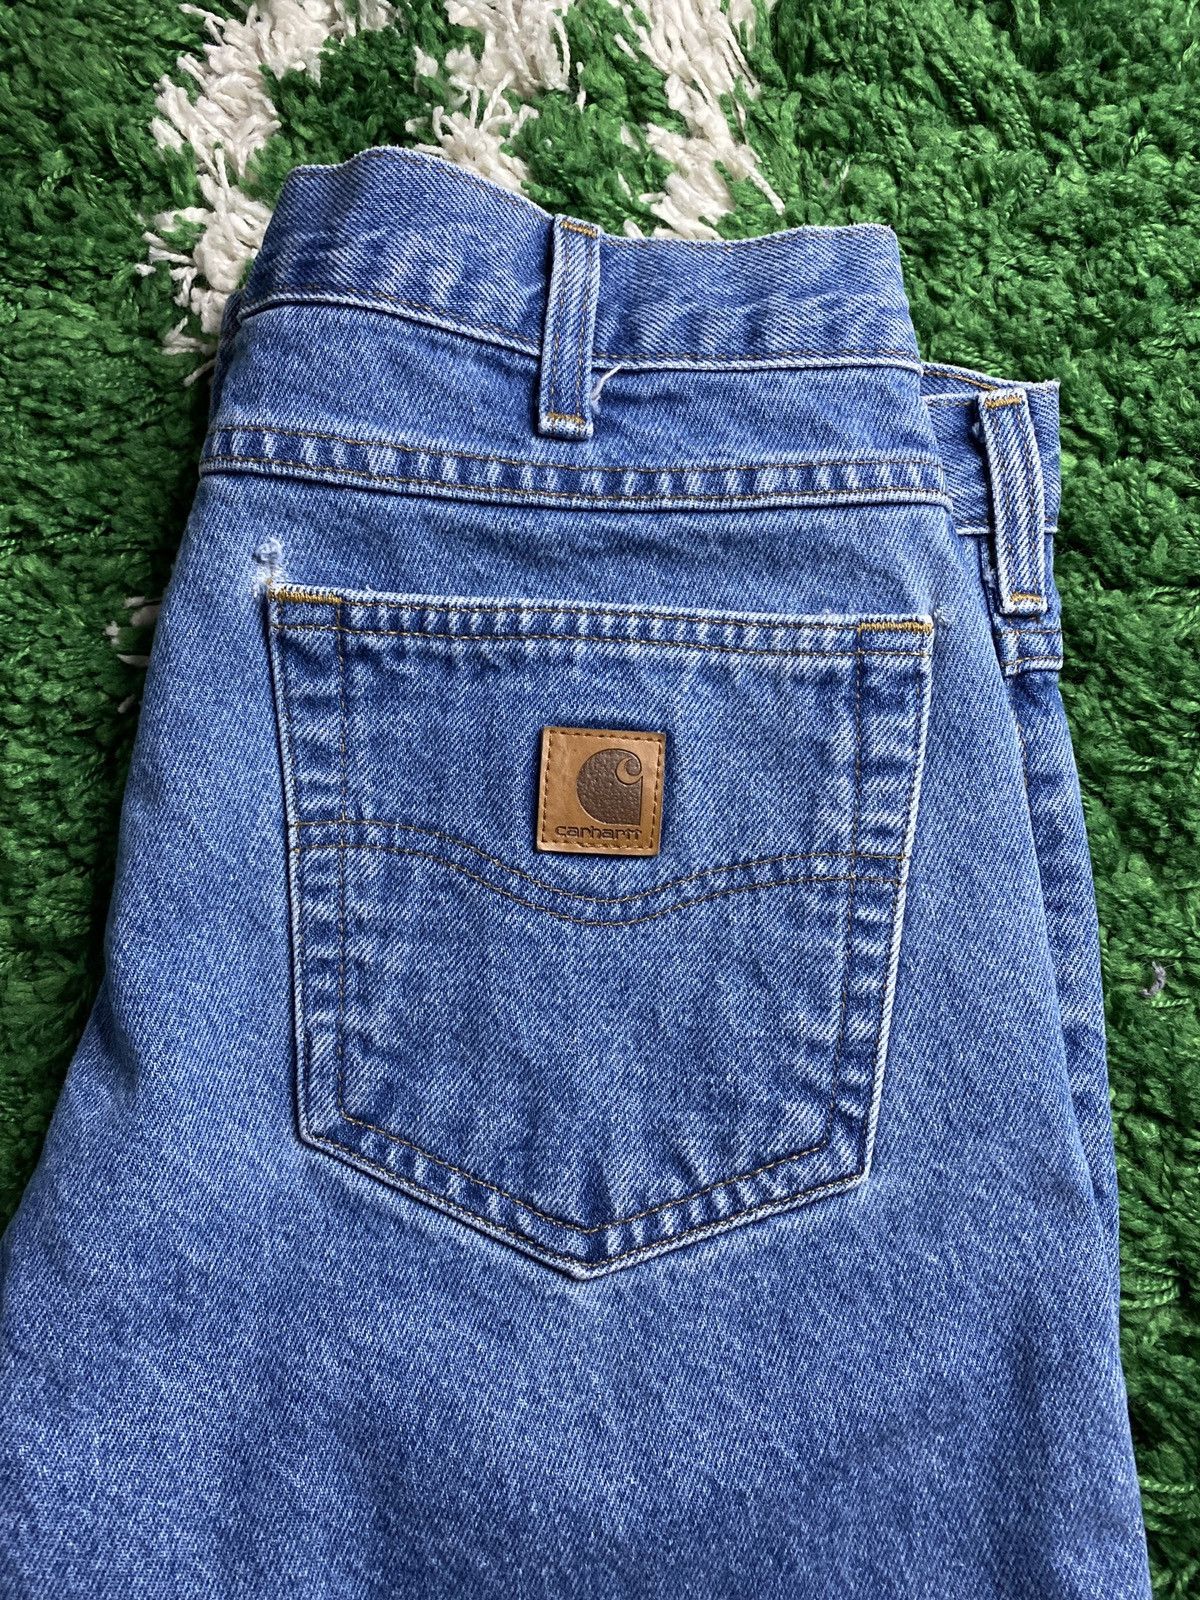 Vintage Carhart Denim Jeans 33x32 | Grailed